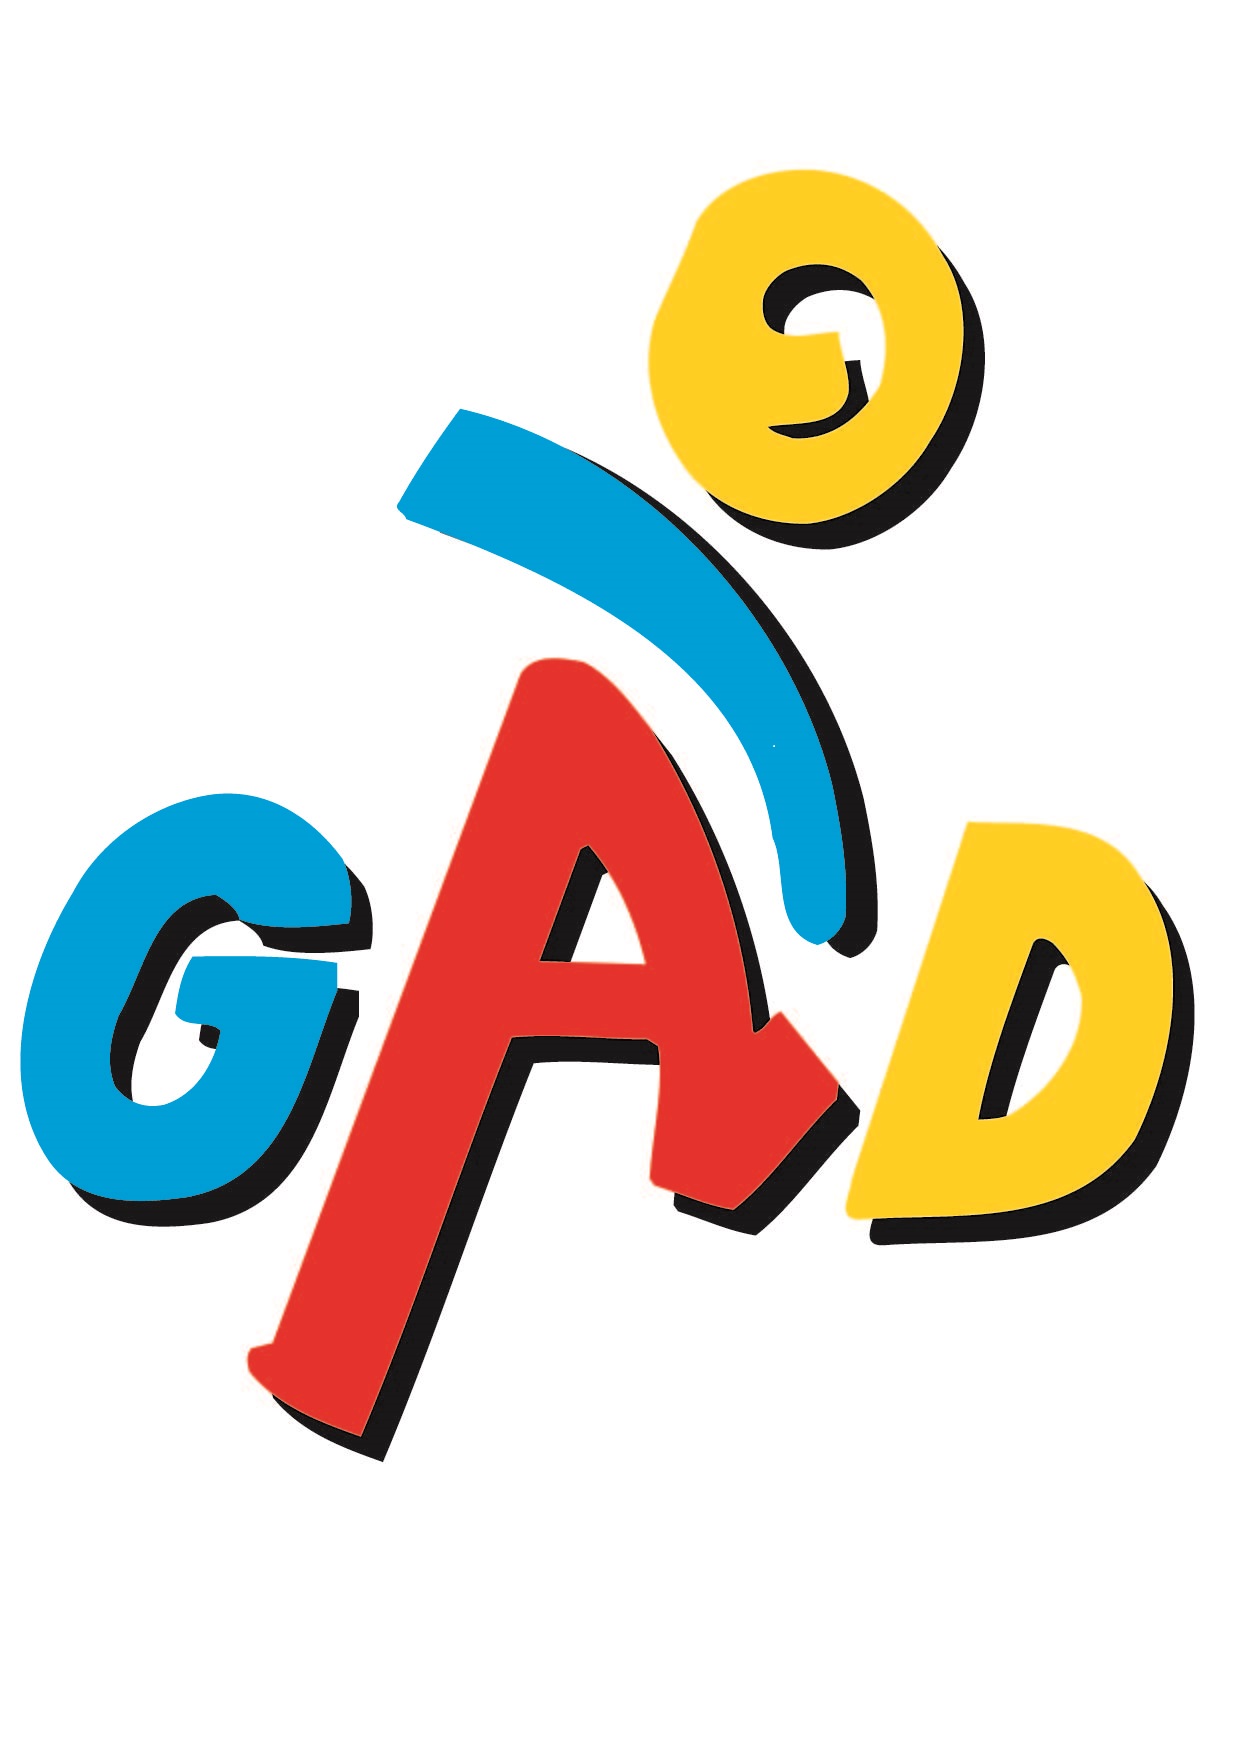 gruppo-atletico-dongio-logo.jpg